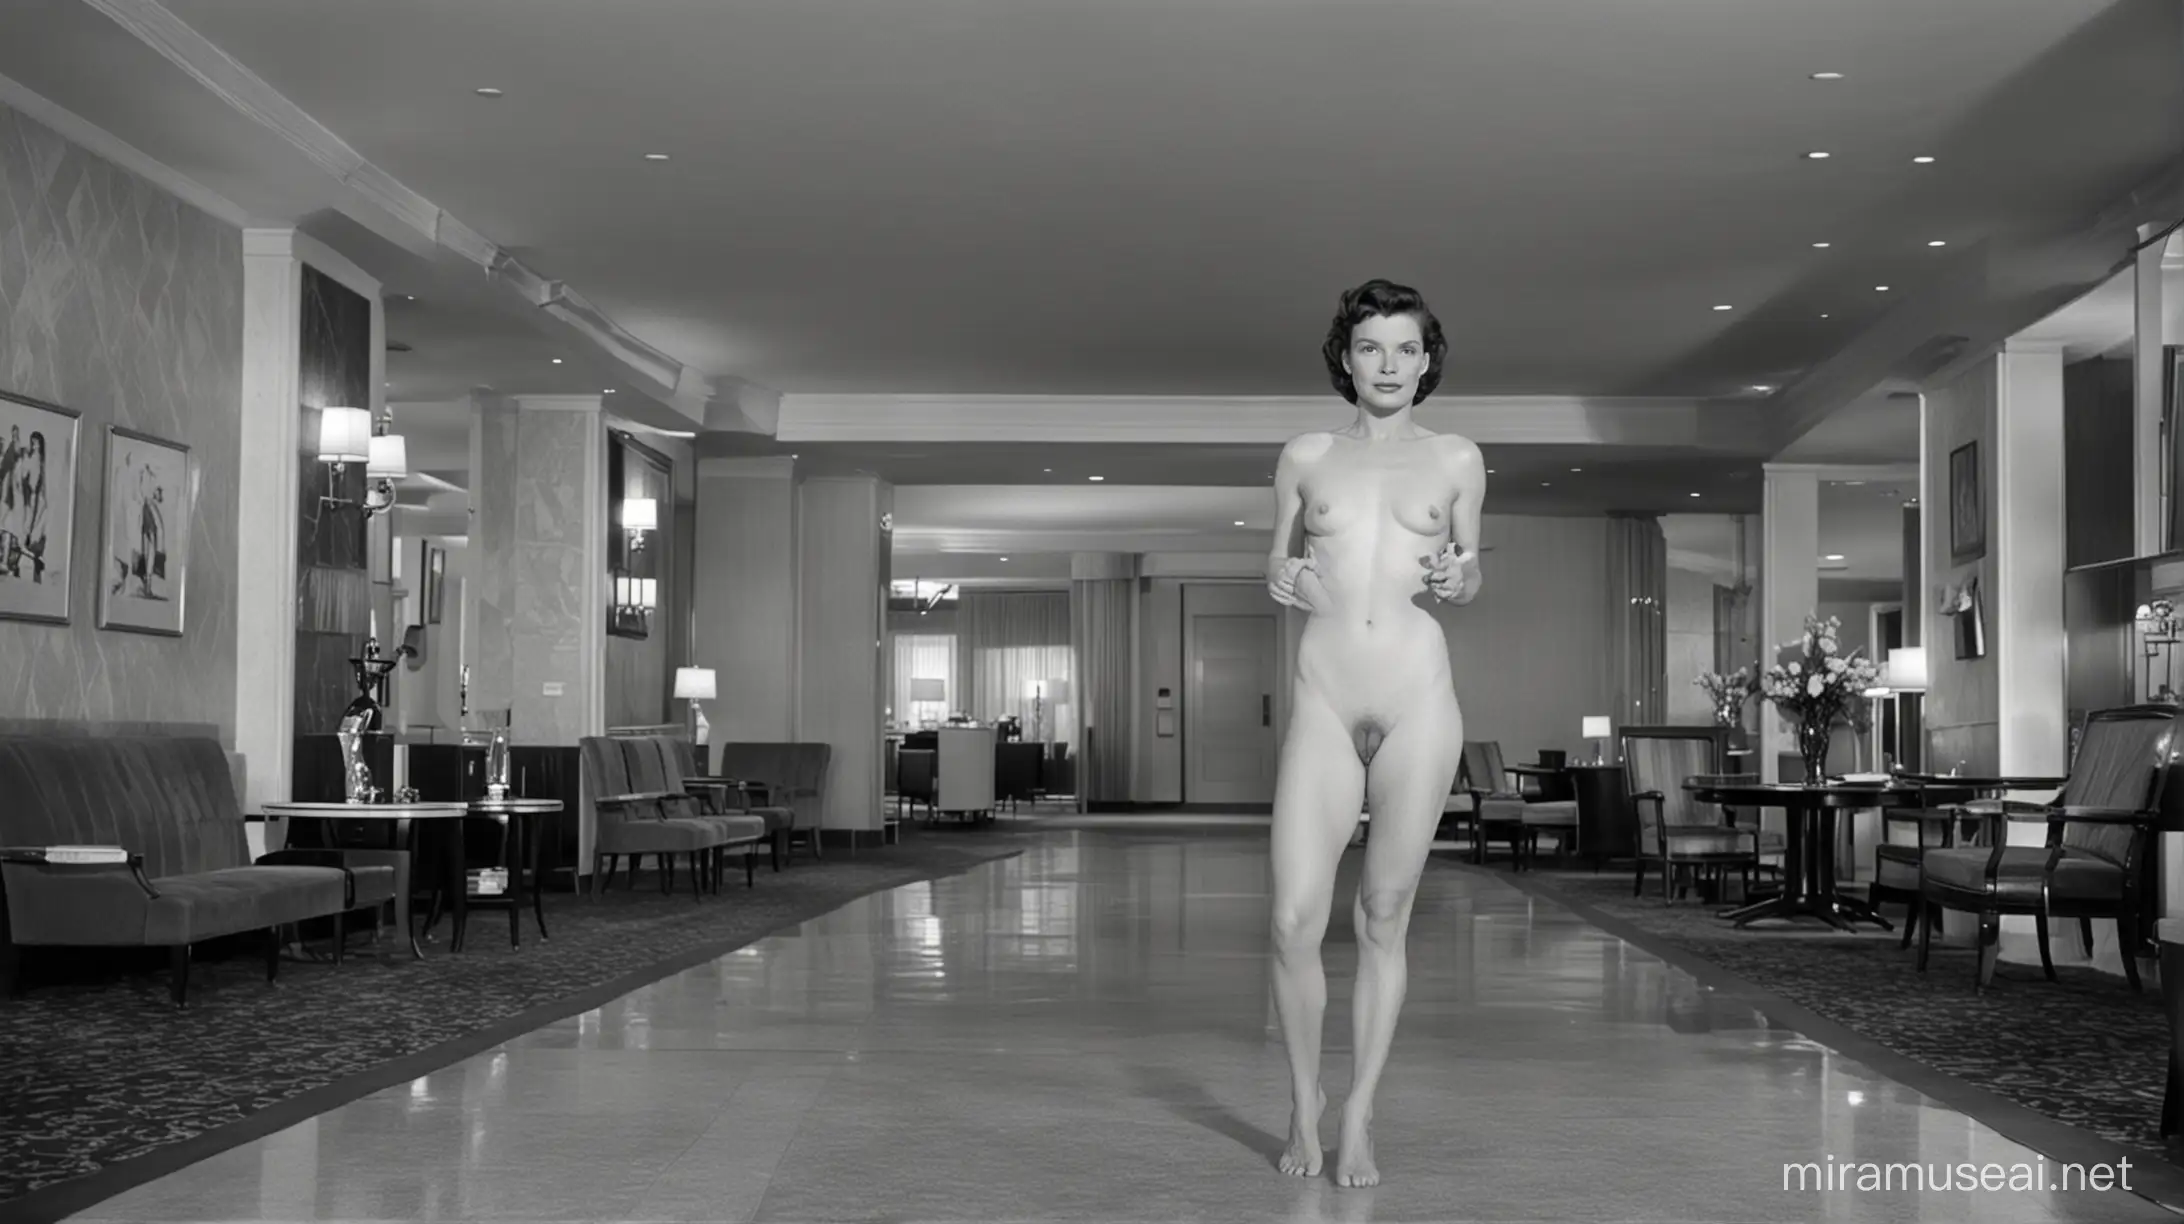 Nude katharine hepburn, 1950's hollywood, wide angle, hotel lobby